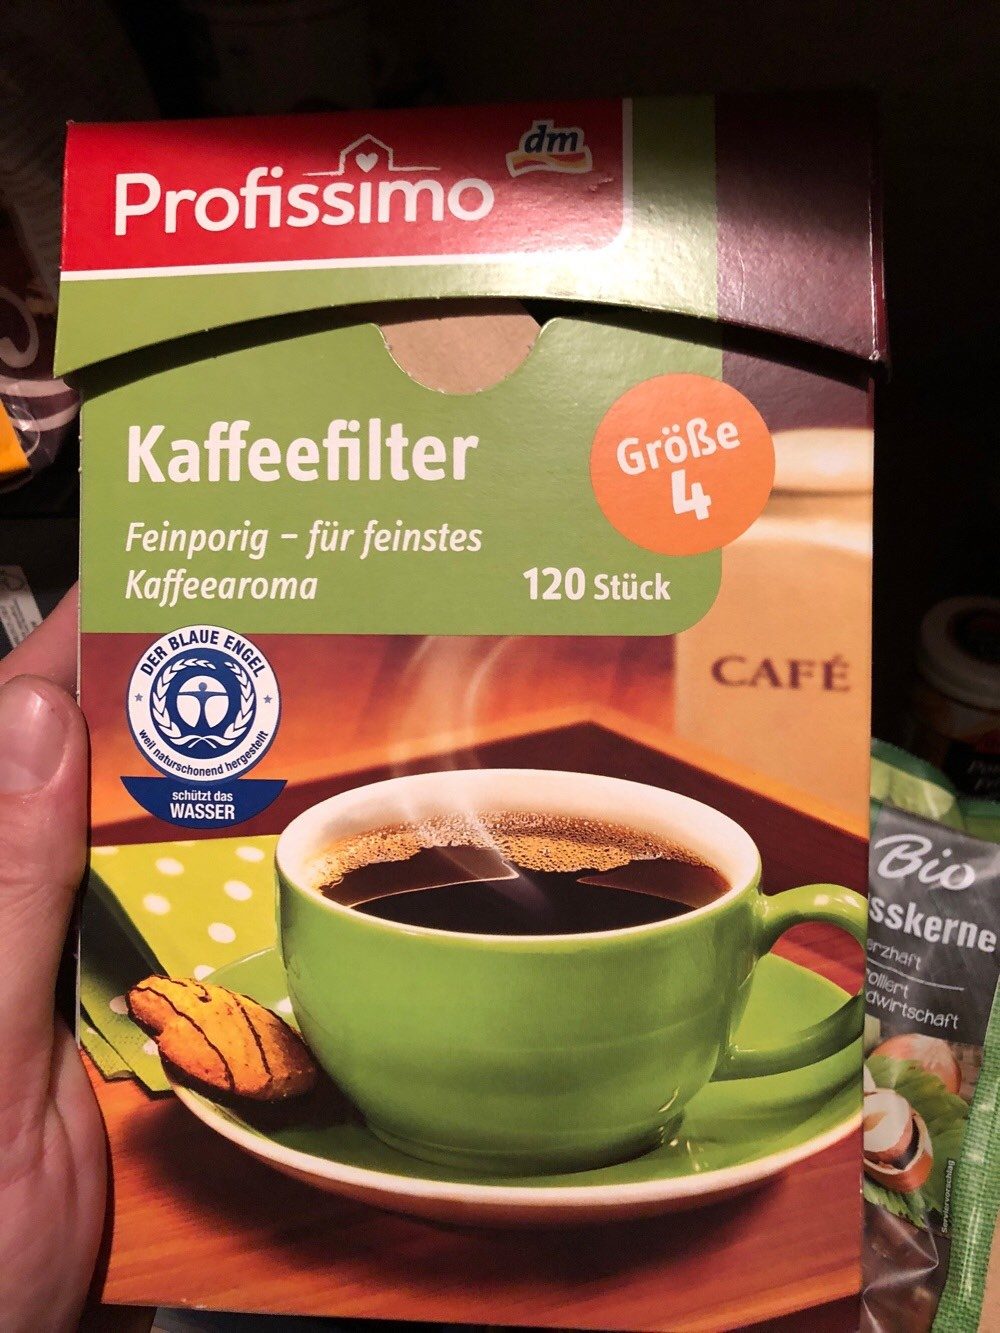 Kaffeefilter - Coffee filter - Product - en